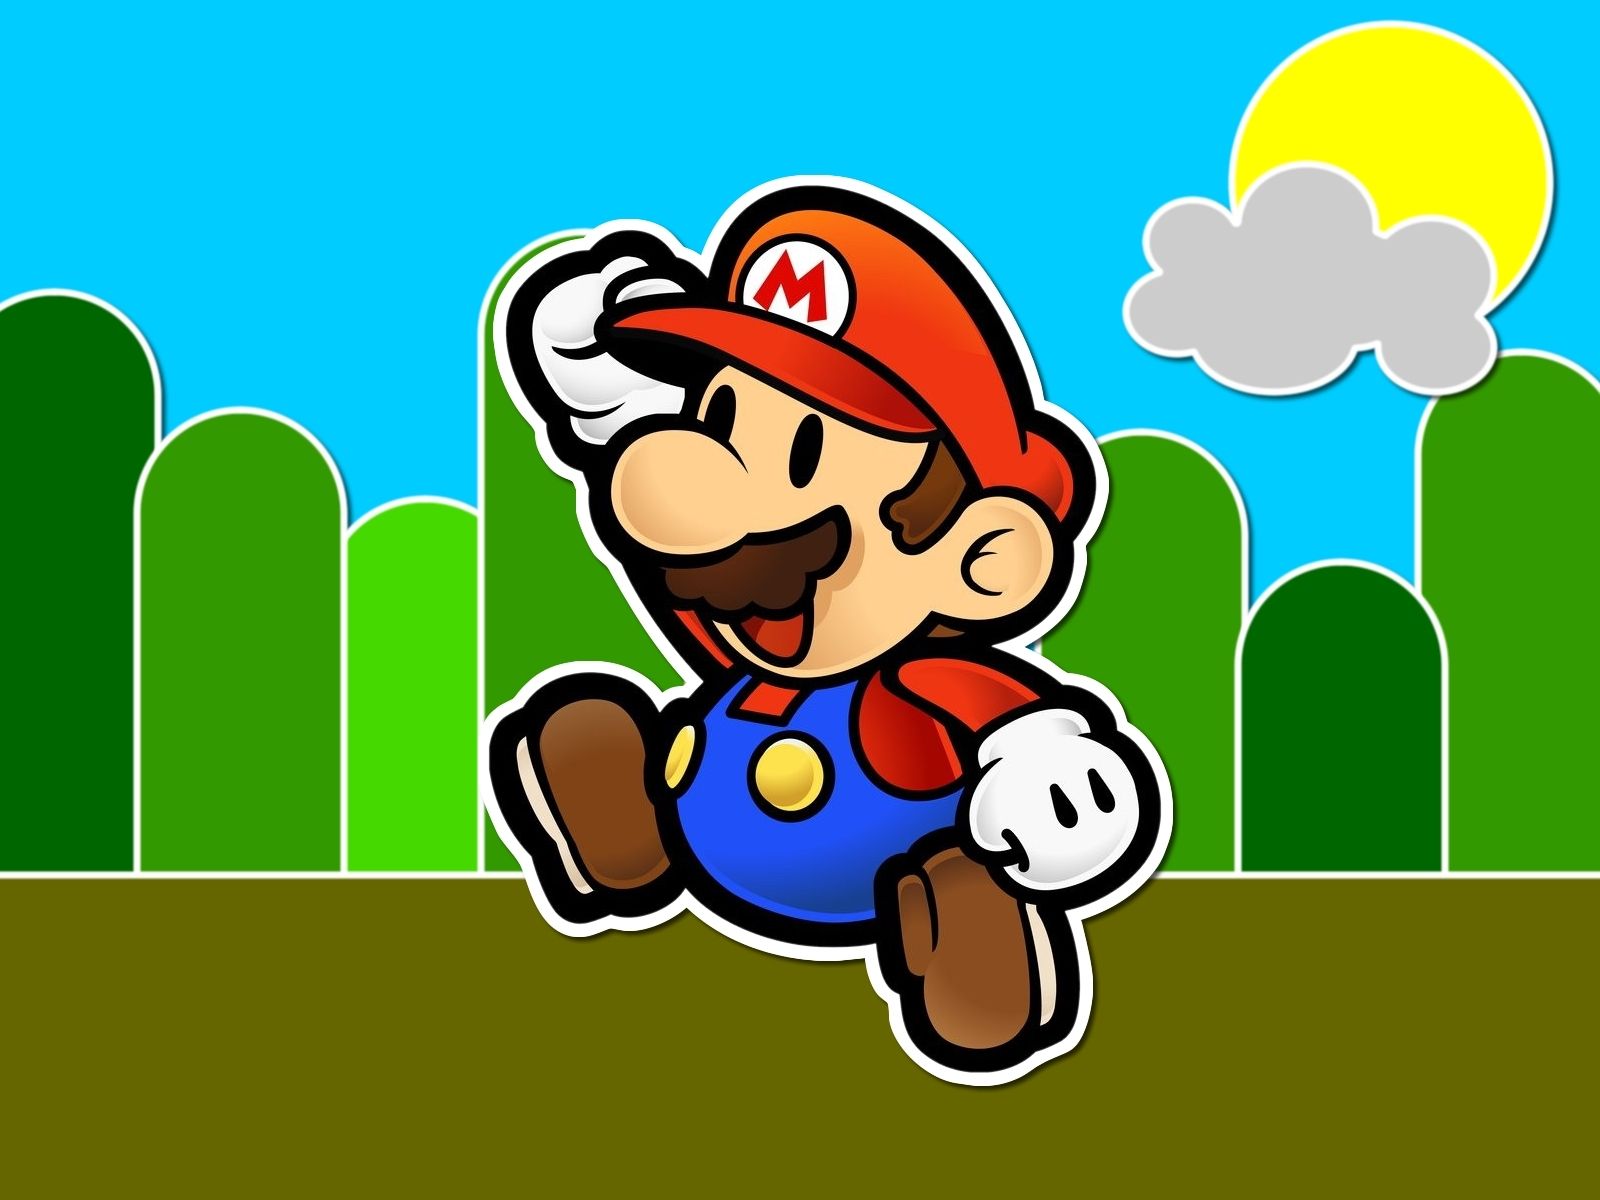 Top Mario Desktop Images for Pinterest